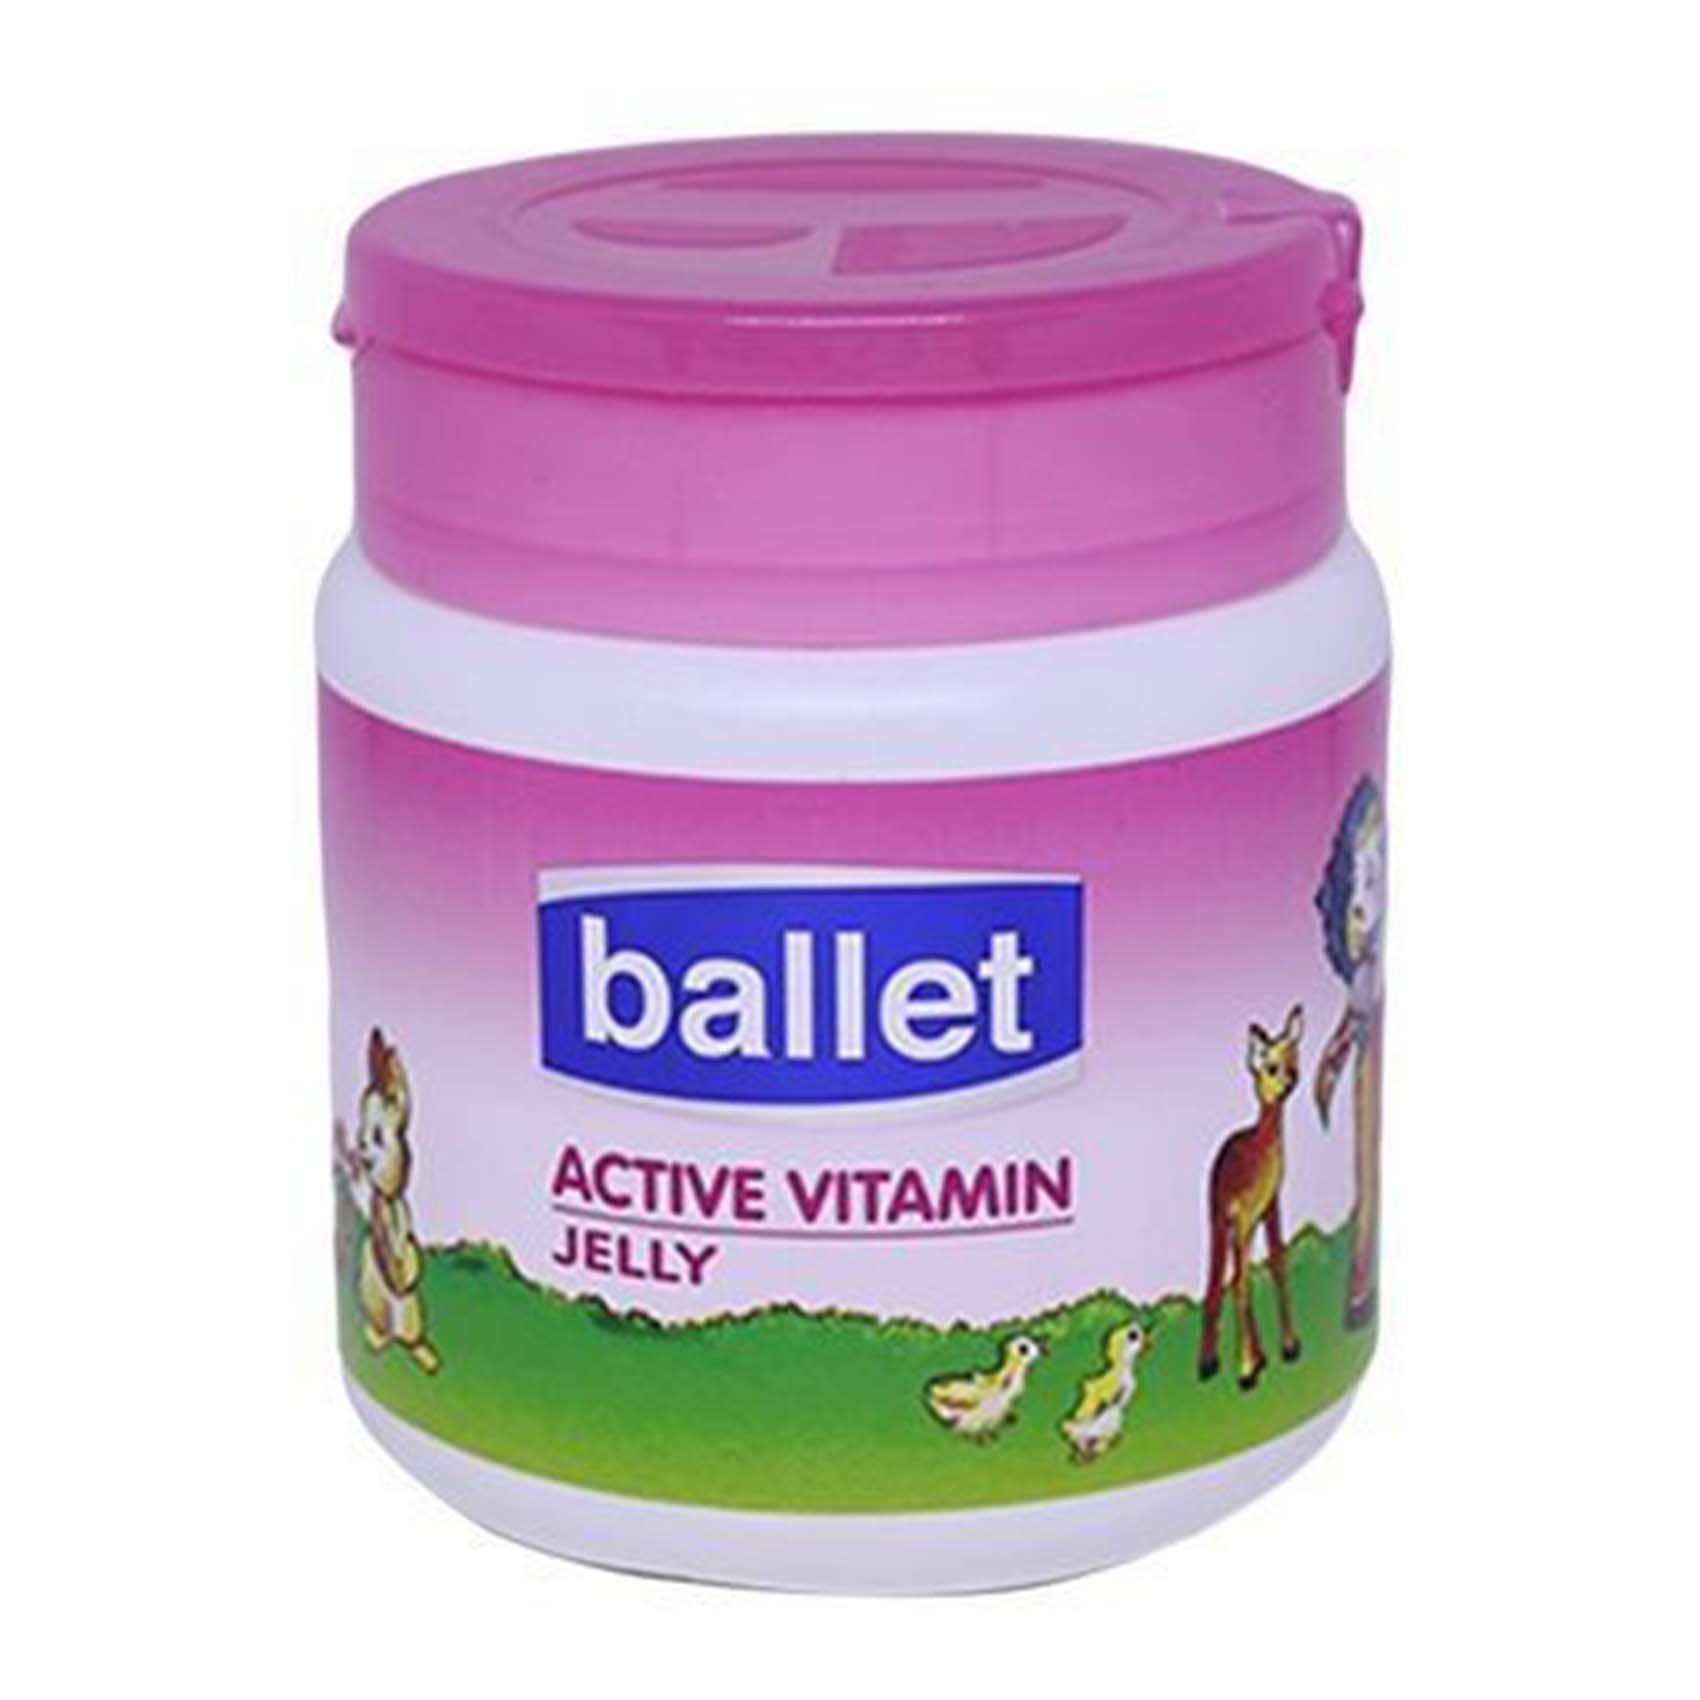 Ballet Vitamin Baby Jelly 250G